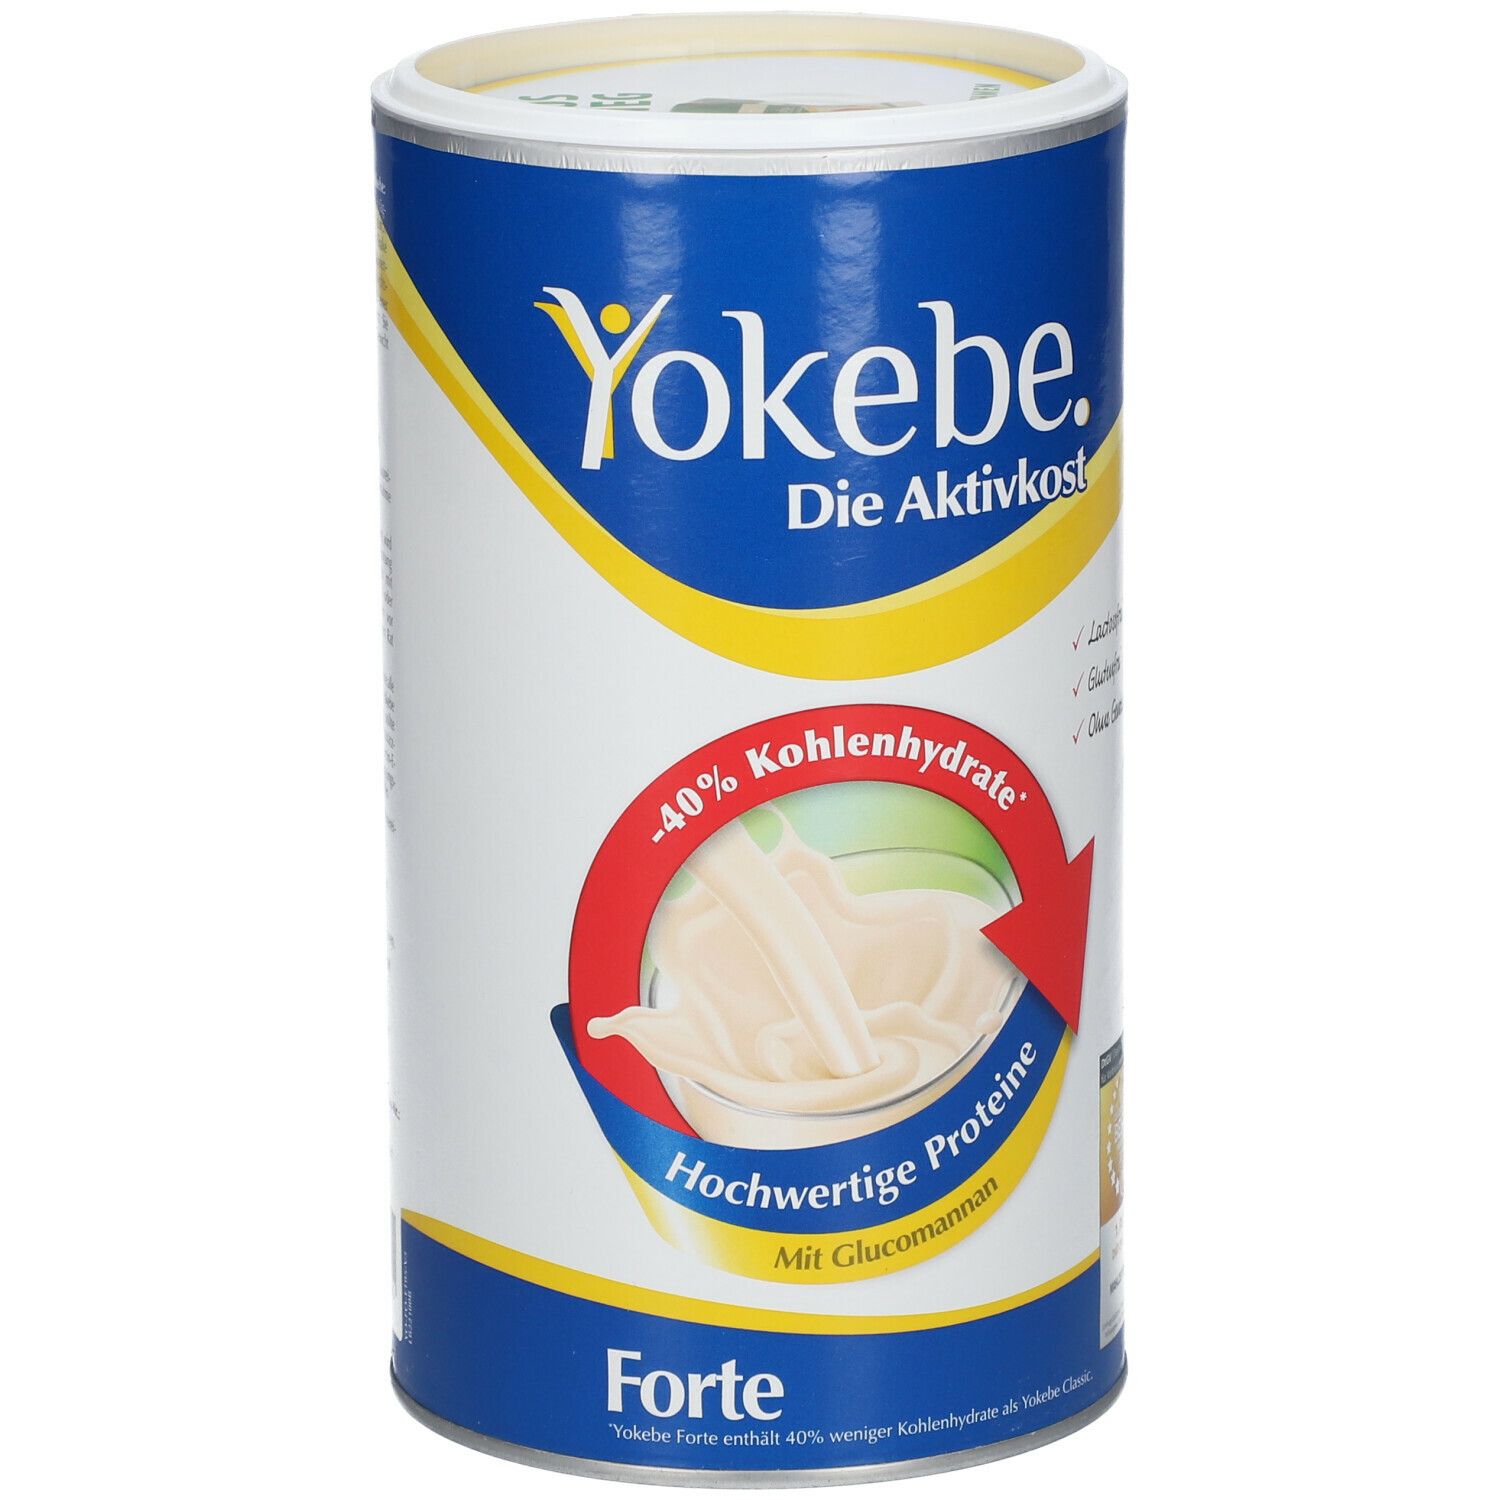 Yokebe Forte